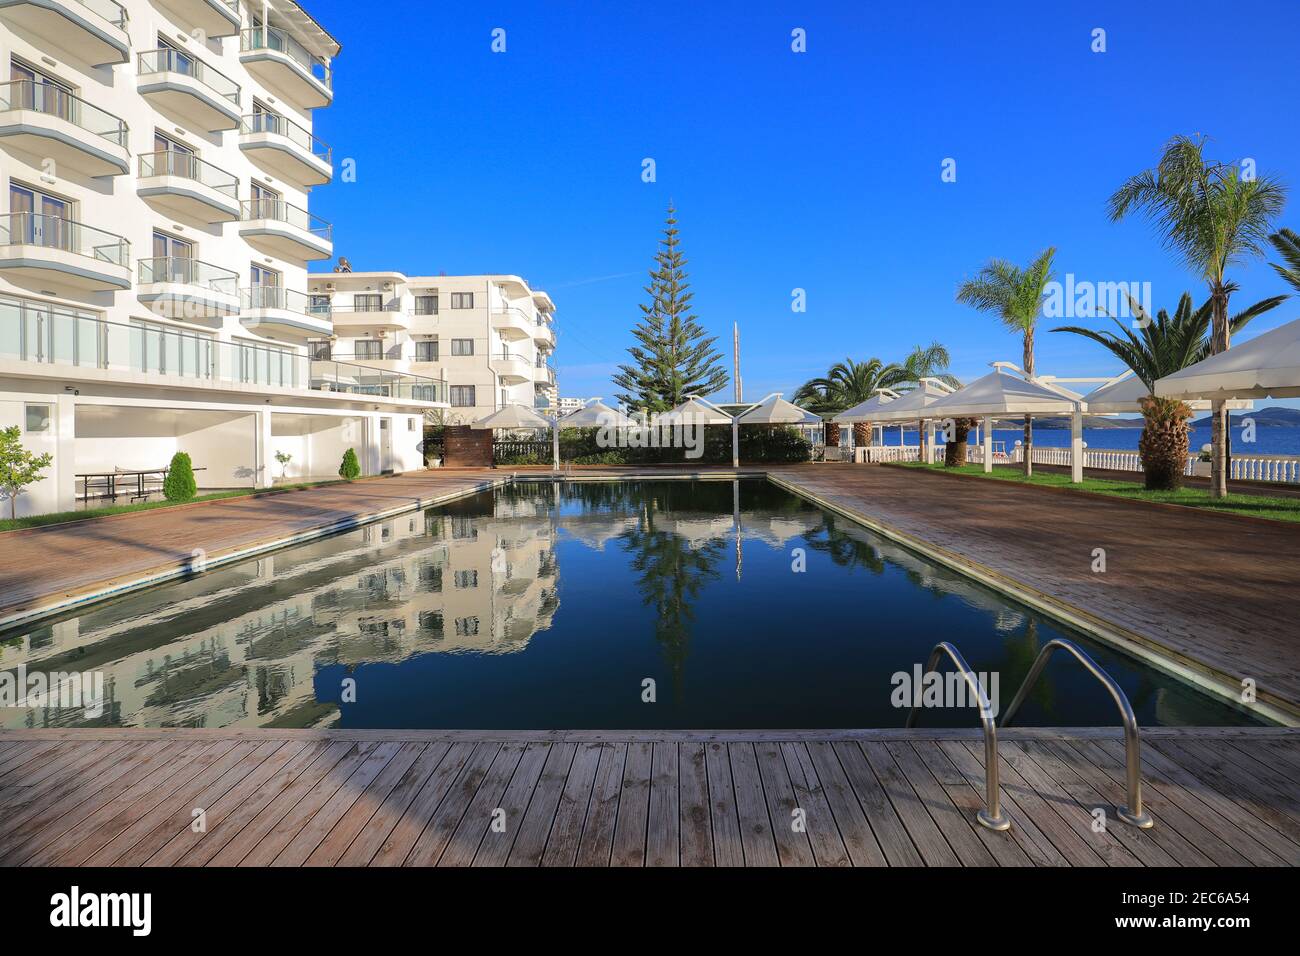 Outdoor swimming pool in resort hotel in Saranda, Albania Stock Photo